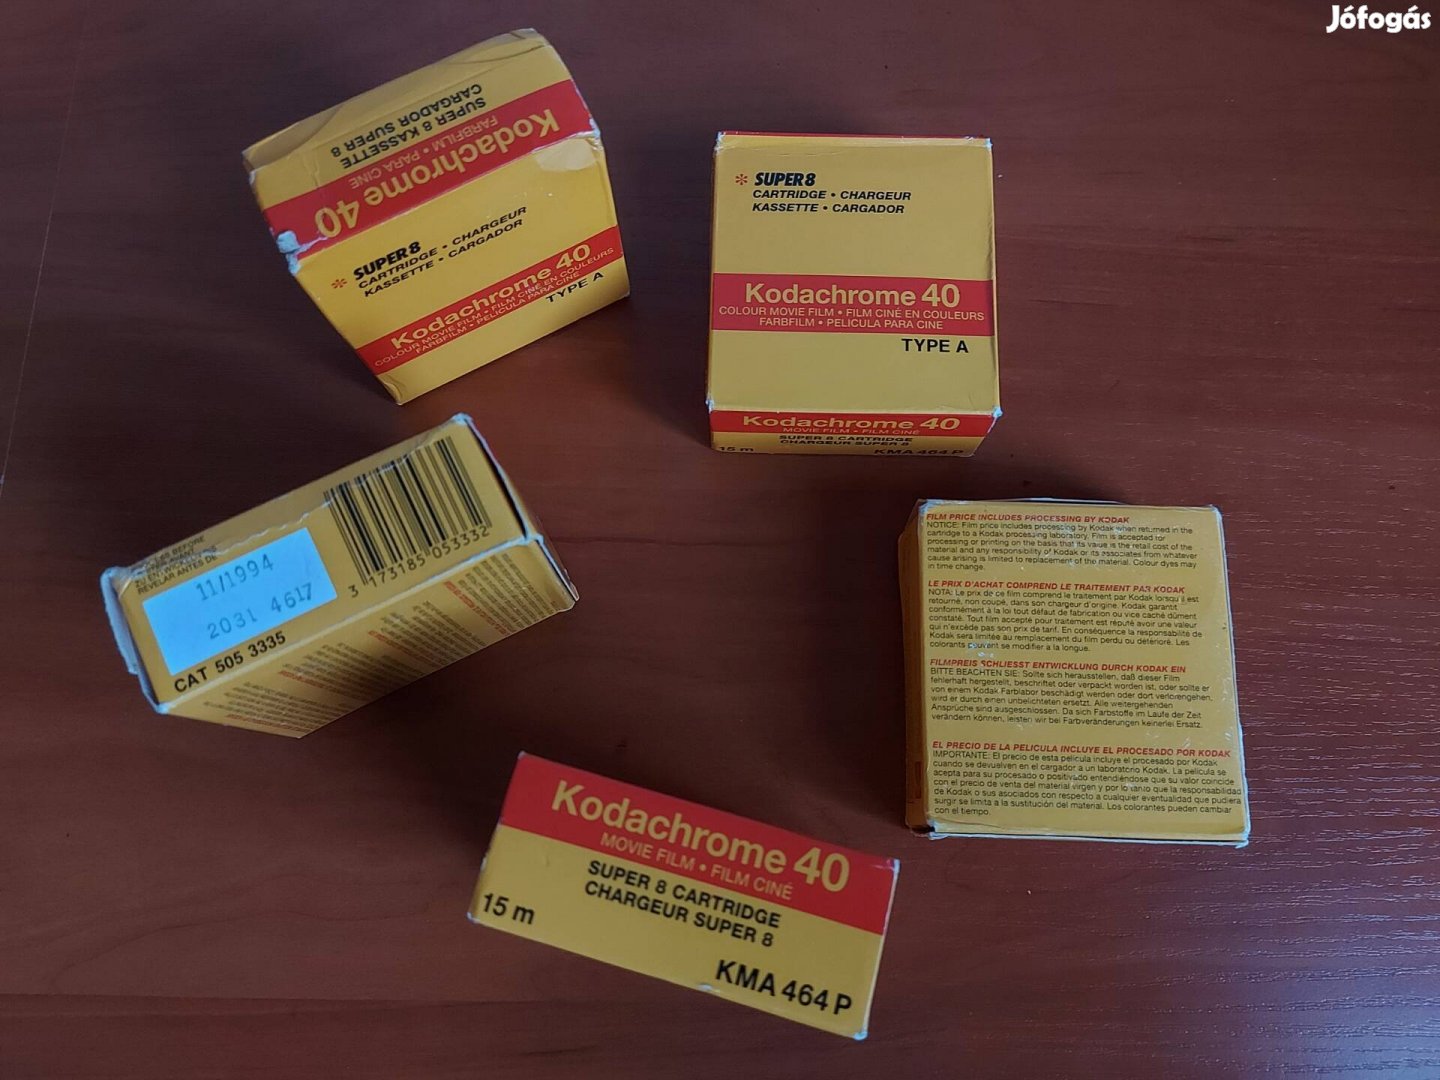 Kodachrome 40 super 8 film